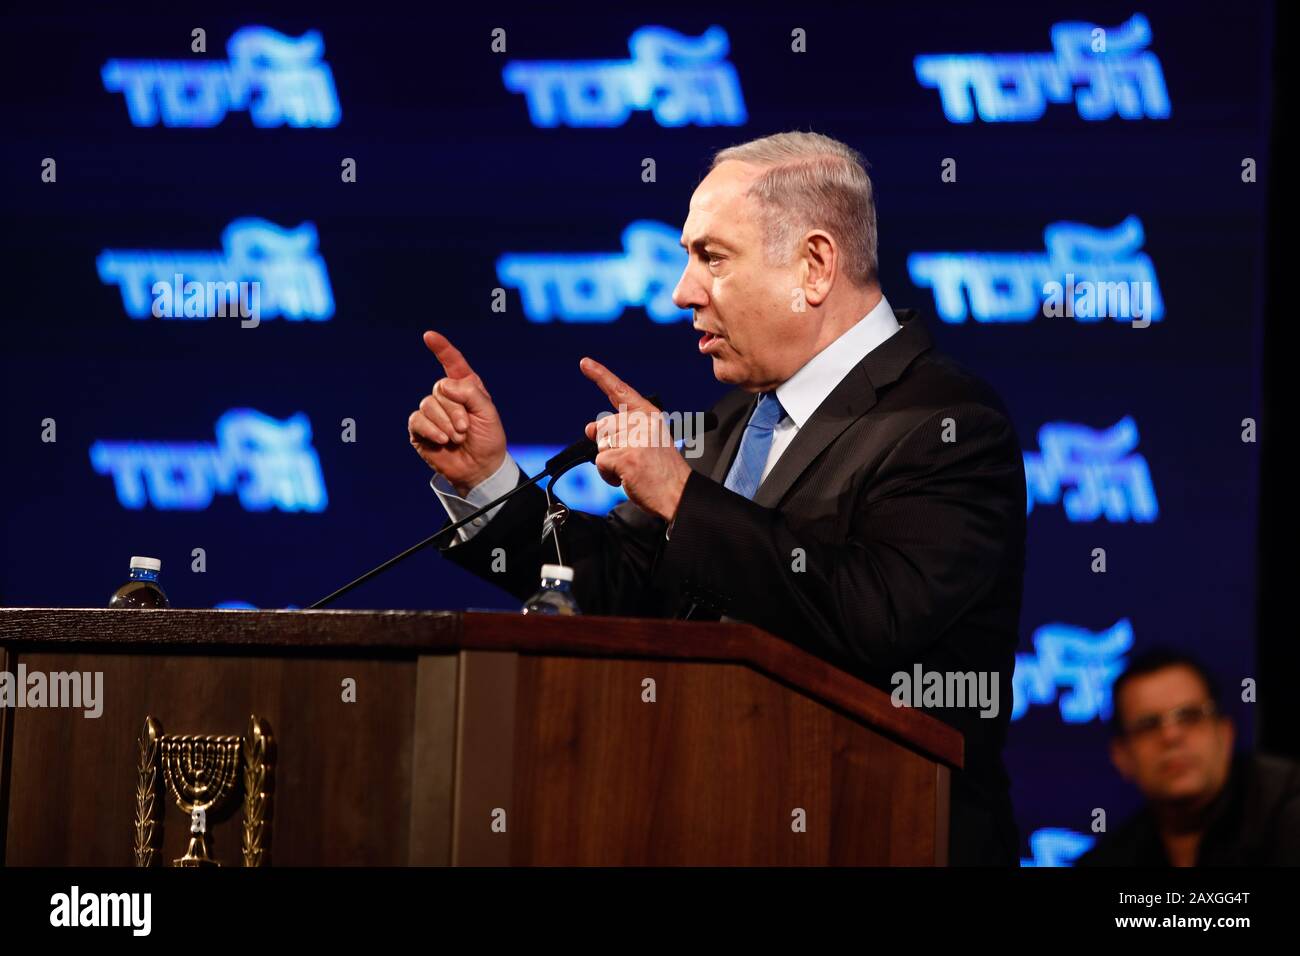 (200212) -- LOD, Feb. 12, 2020 (Xinhua) -- Israeli Prime Minister Benjamin Netanyahu speaks during a Likud party event in the central Israeli city of Lod on Feb. 11, 2020. (Gideon Markowicz/JINI/Handout via Xinhua) Stock Photo